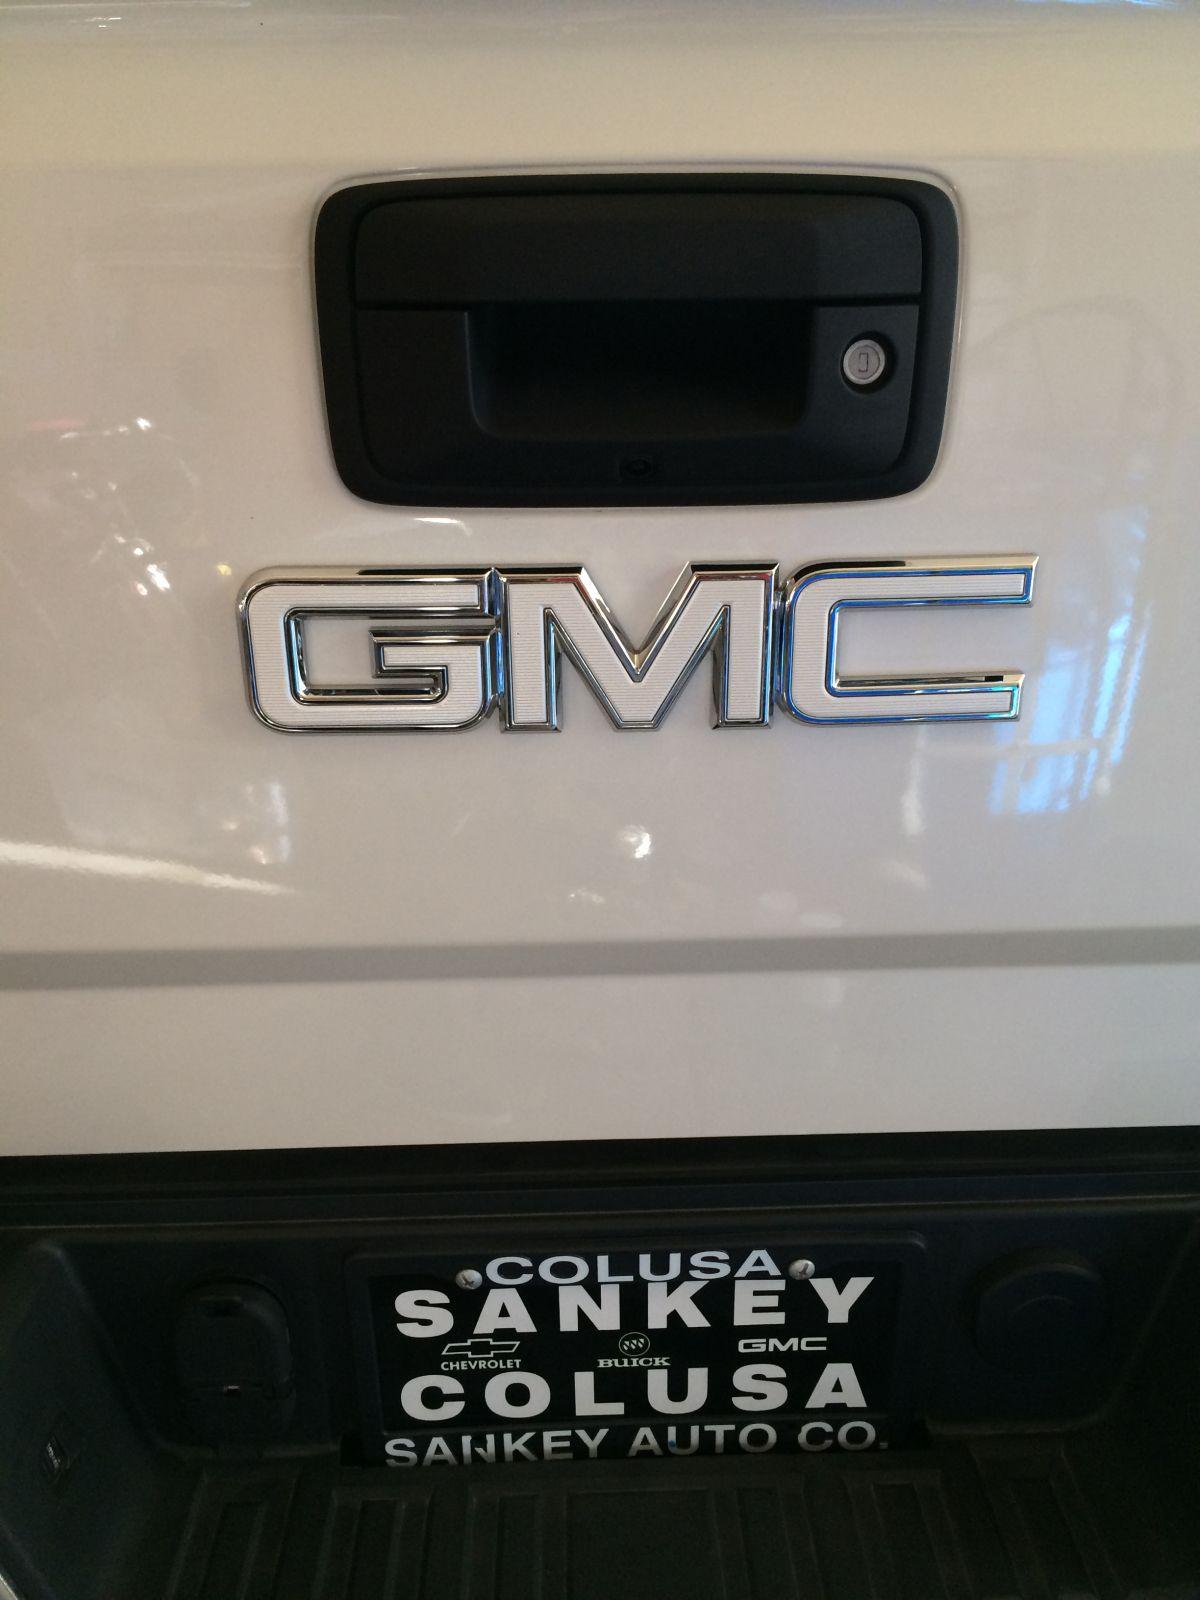 White GMC Logo - EChavez - 2014 Sierra SLT 6.2 White Diamond - Page 6 - Vehicle ...